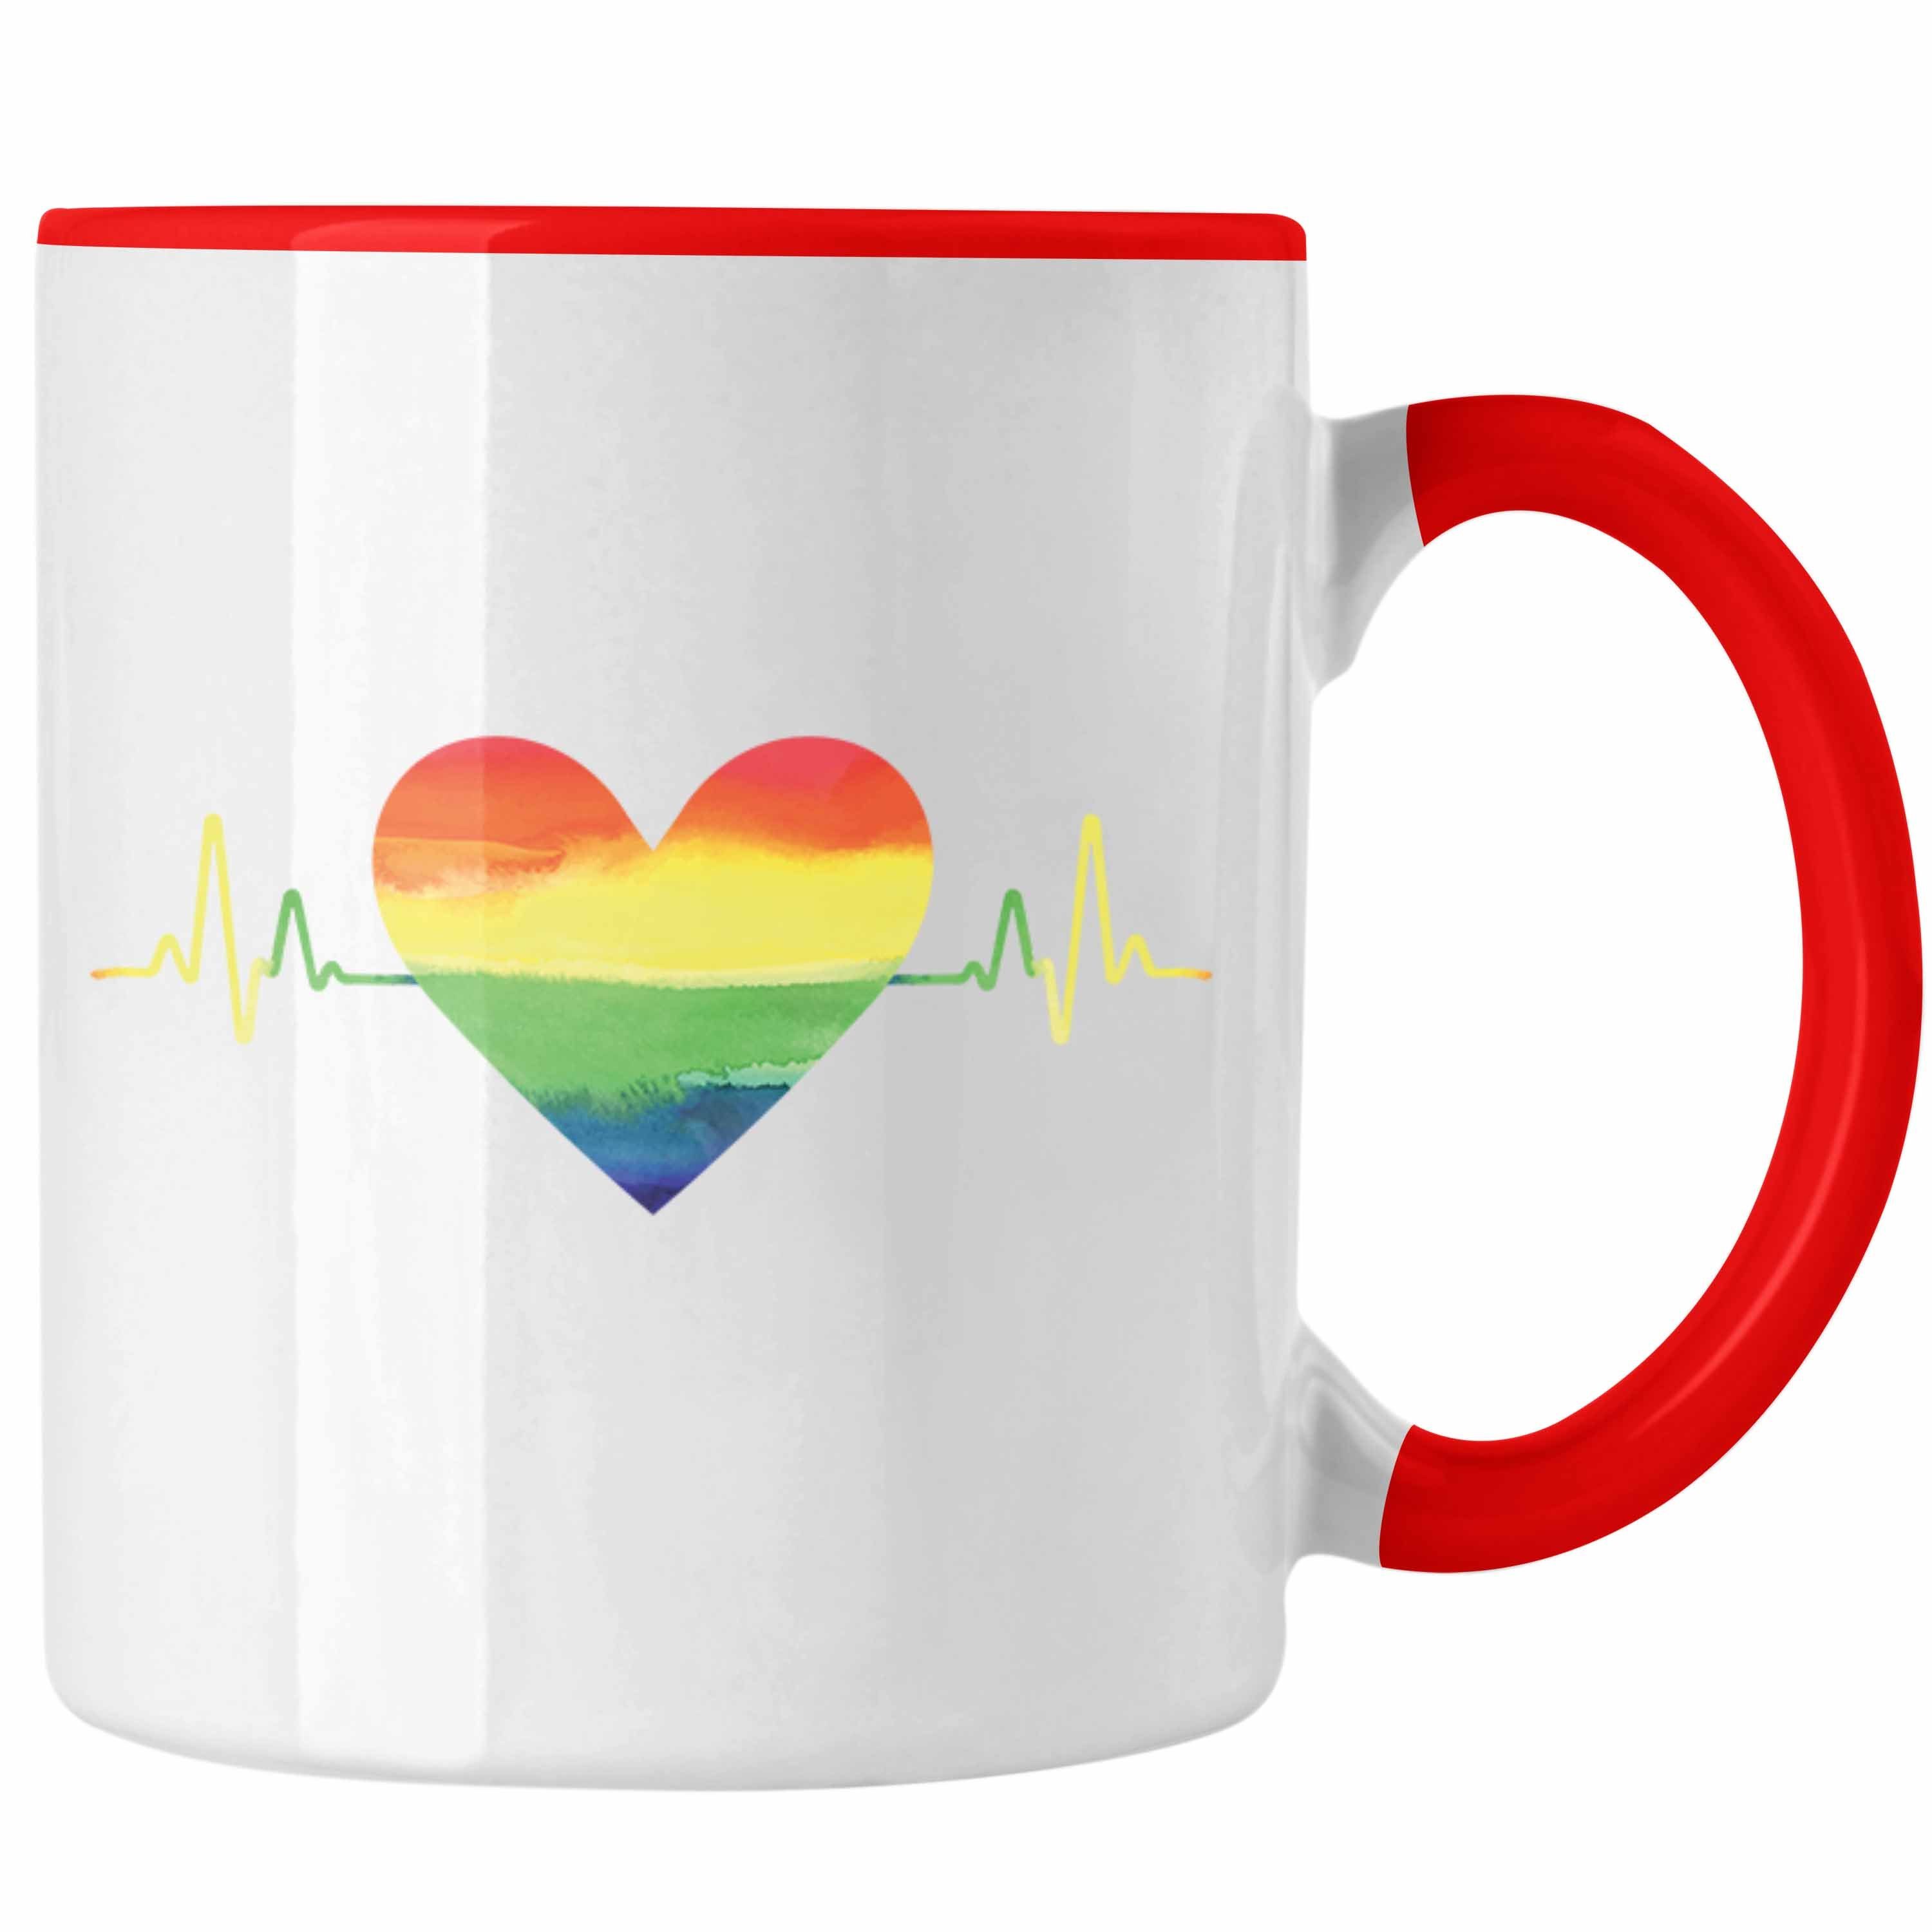 Trendation Tasse Trendation - Regenbogen Tasse Geschenk LGBT Schwule Lesben Transgender Grafik Pride Herzschlag Rot